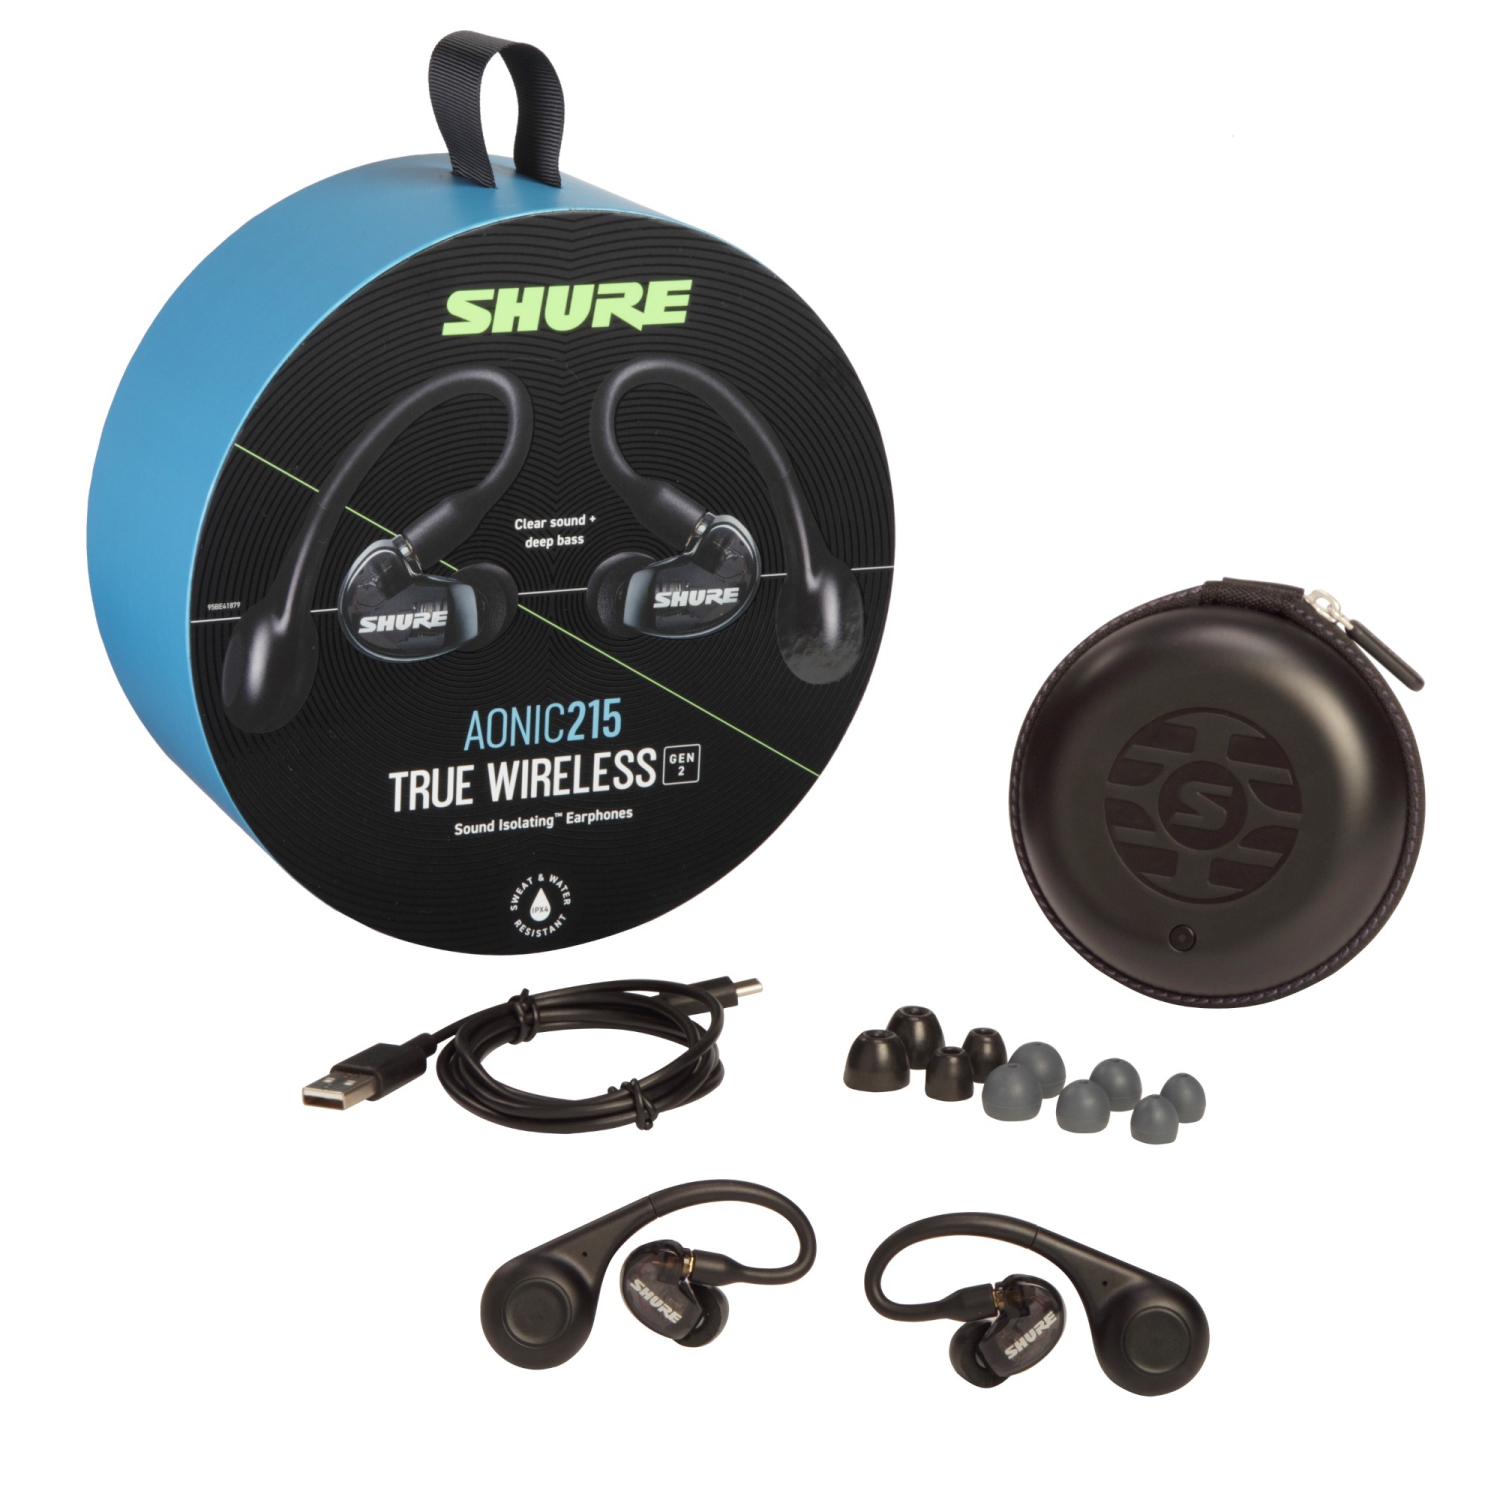 Shure AONIC 215 True Wireless Sound Isolating Earphones, Gen 2